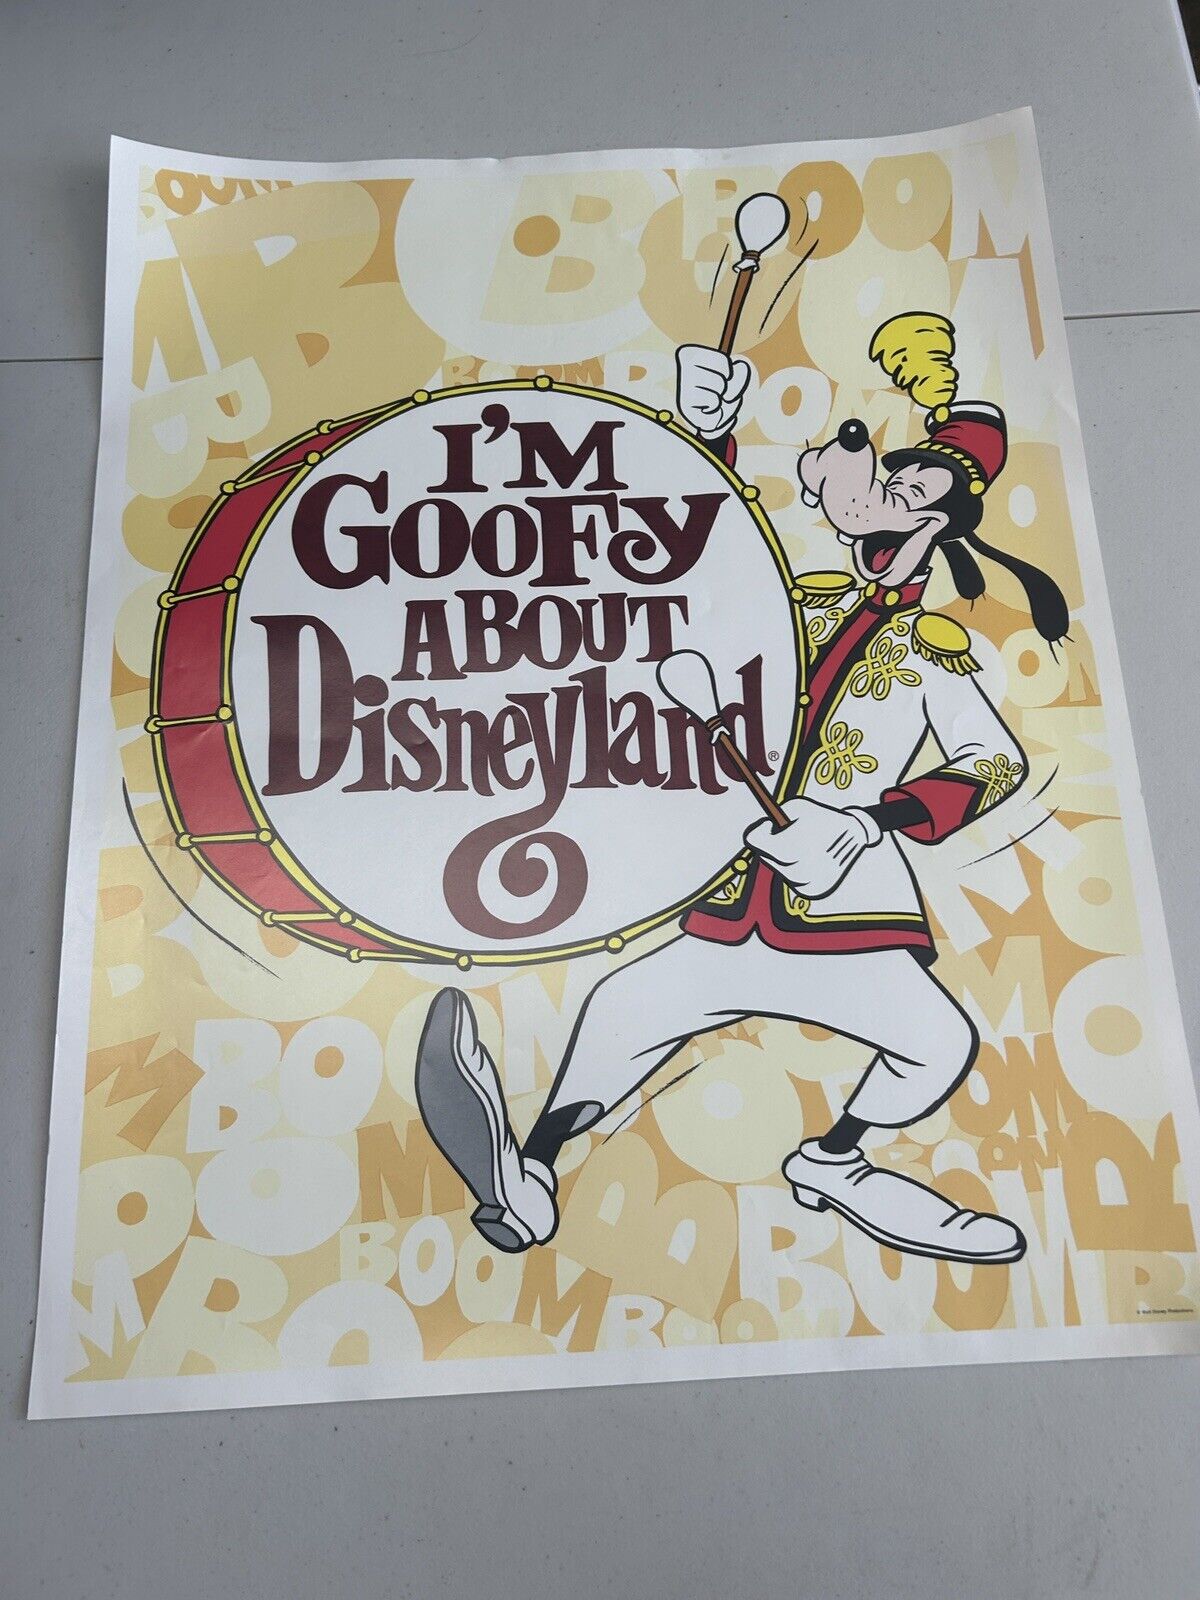 Disneyland Vintage I’m Goofy About Disneyland Poster-Late 1970’s  16x20